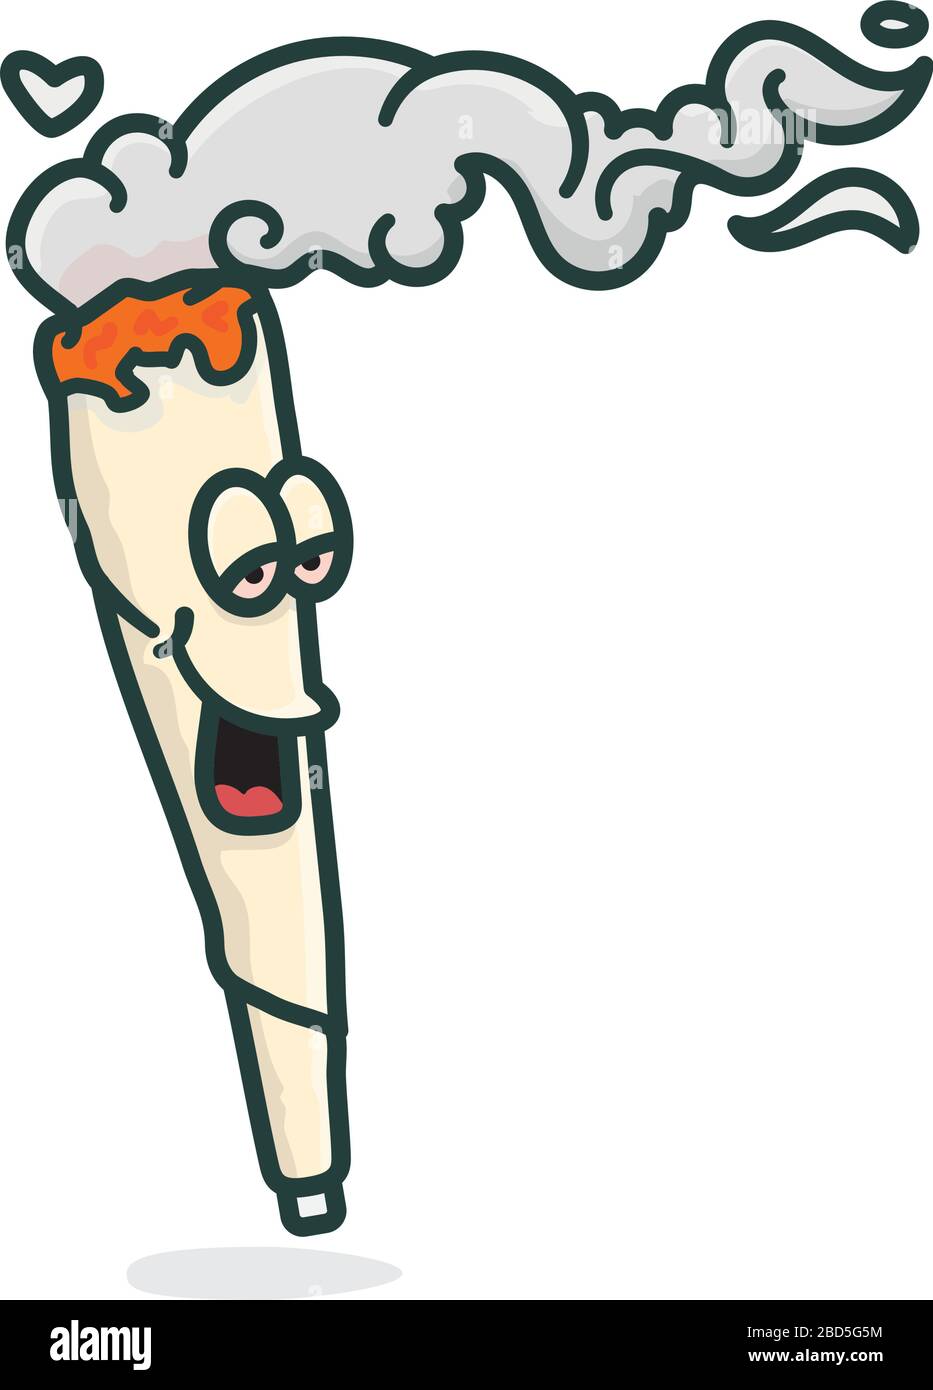 Happy stoned burning joint cartoon character isolated vector